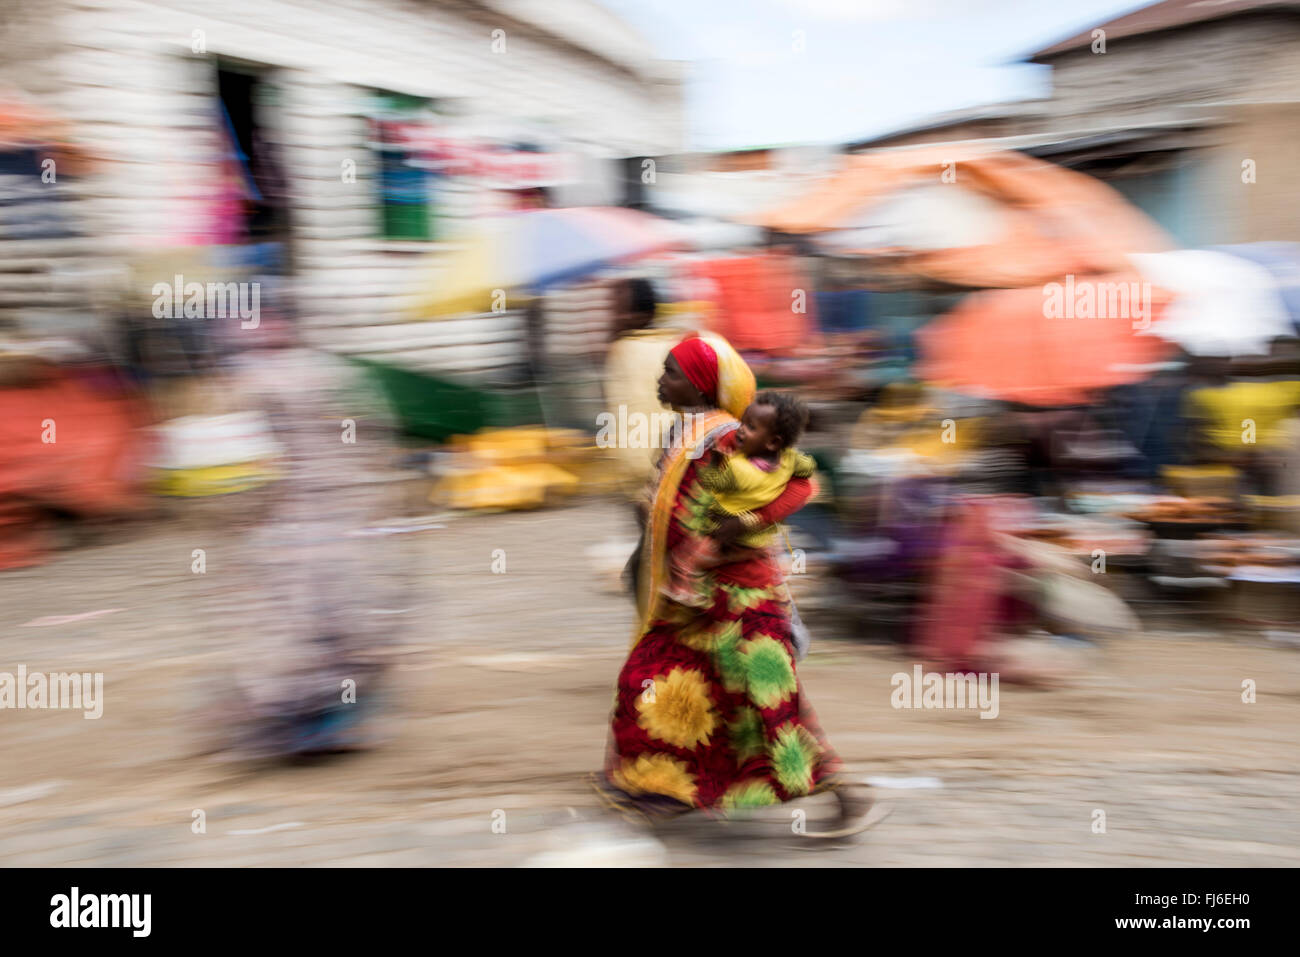 Local Market people trading Harar, Ethiopia, Africa Stock Photo